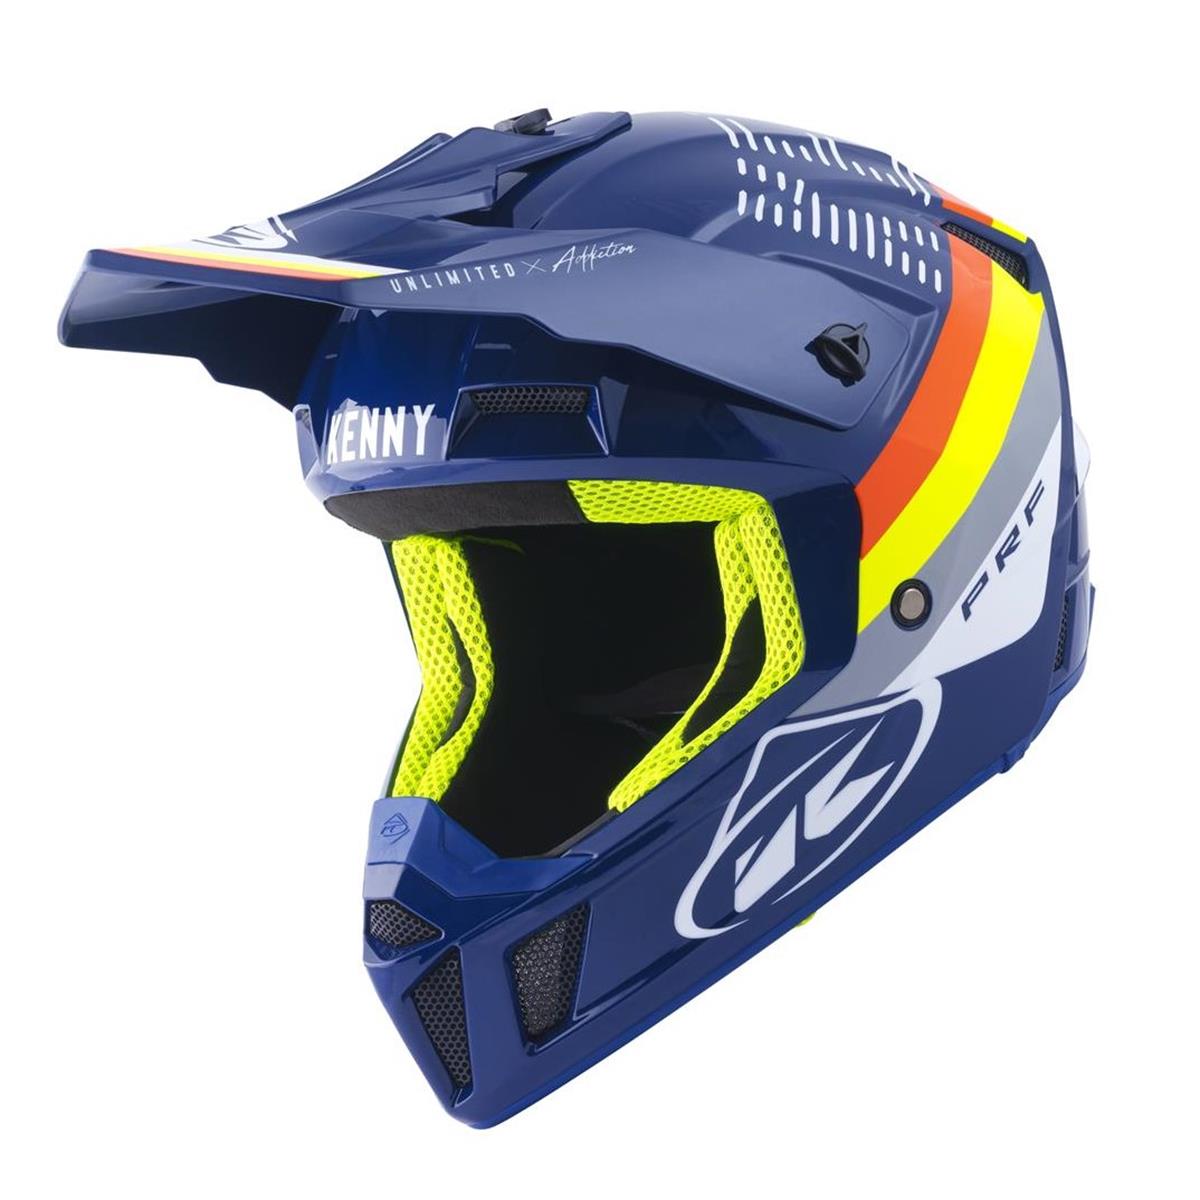 Kenny Motocross-Helm Performance Graphic - Navy